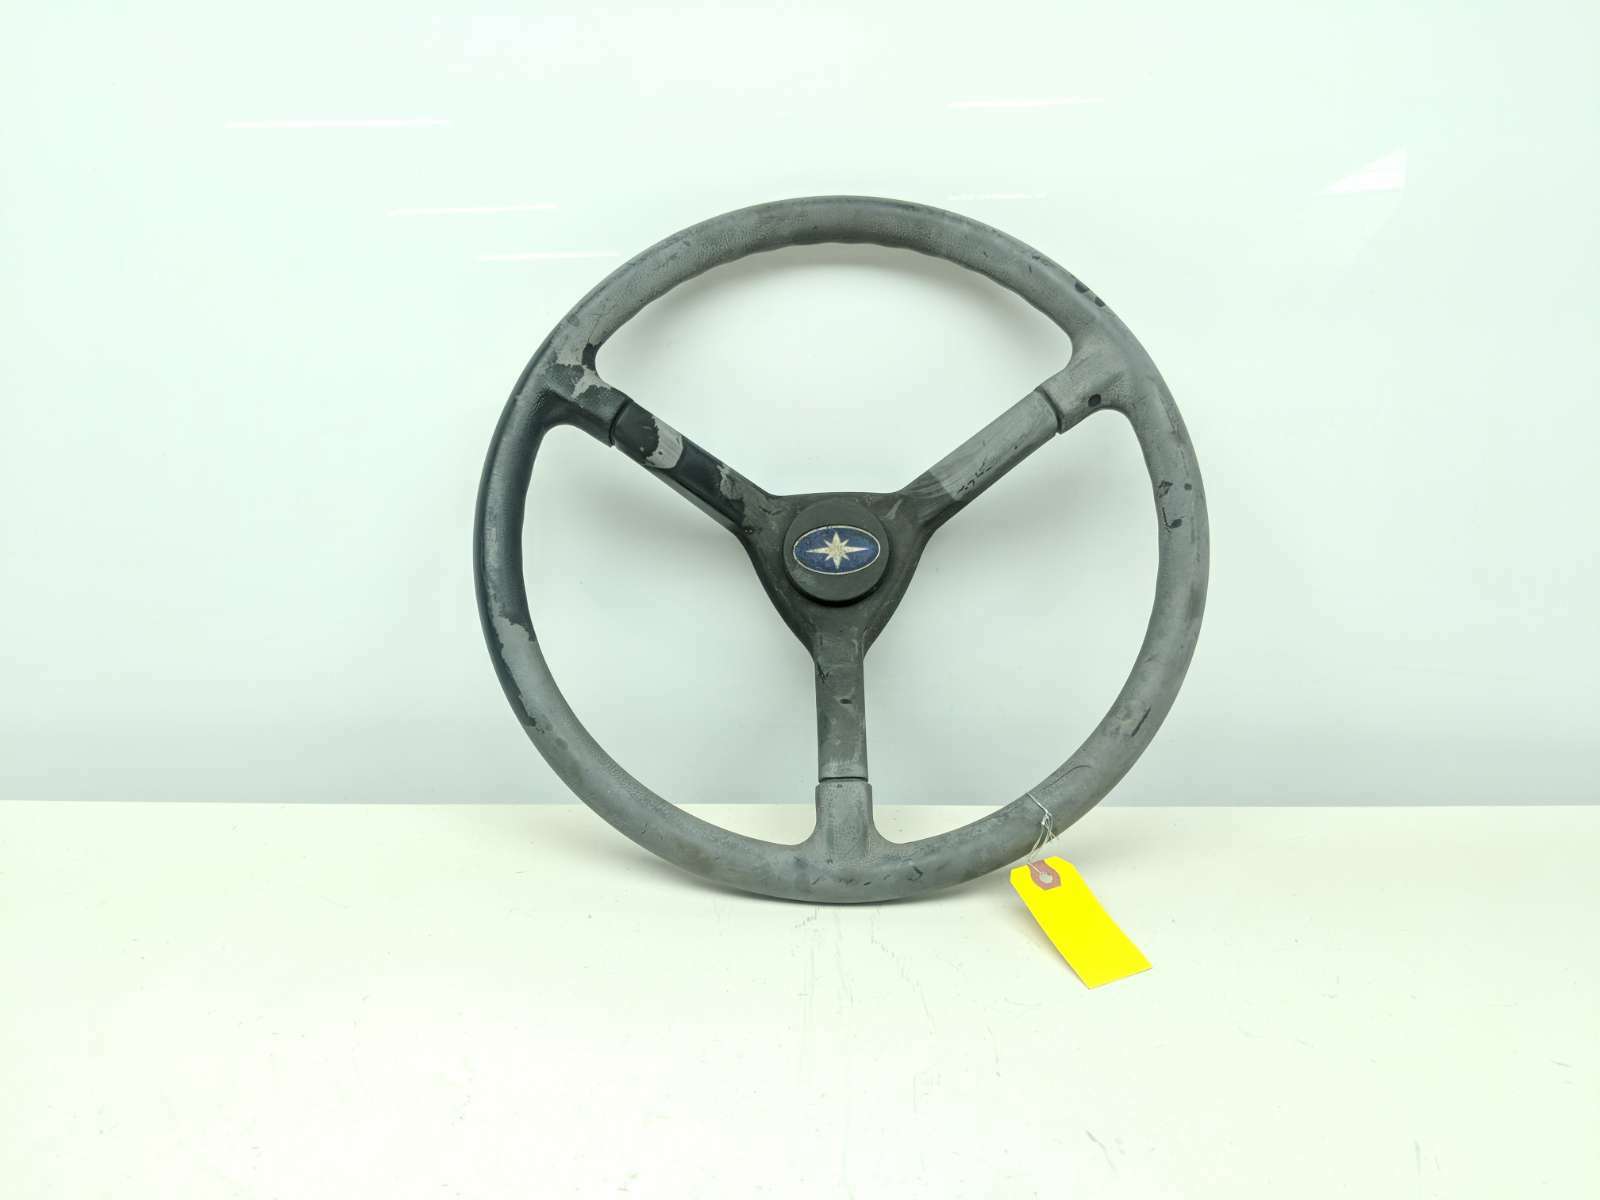 06 Polaris Ranger 500 4x4 Steering Wheel